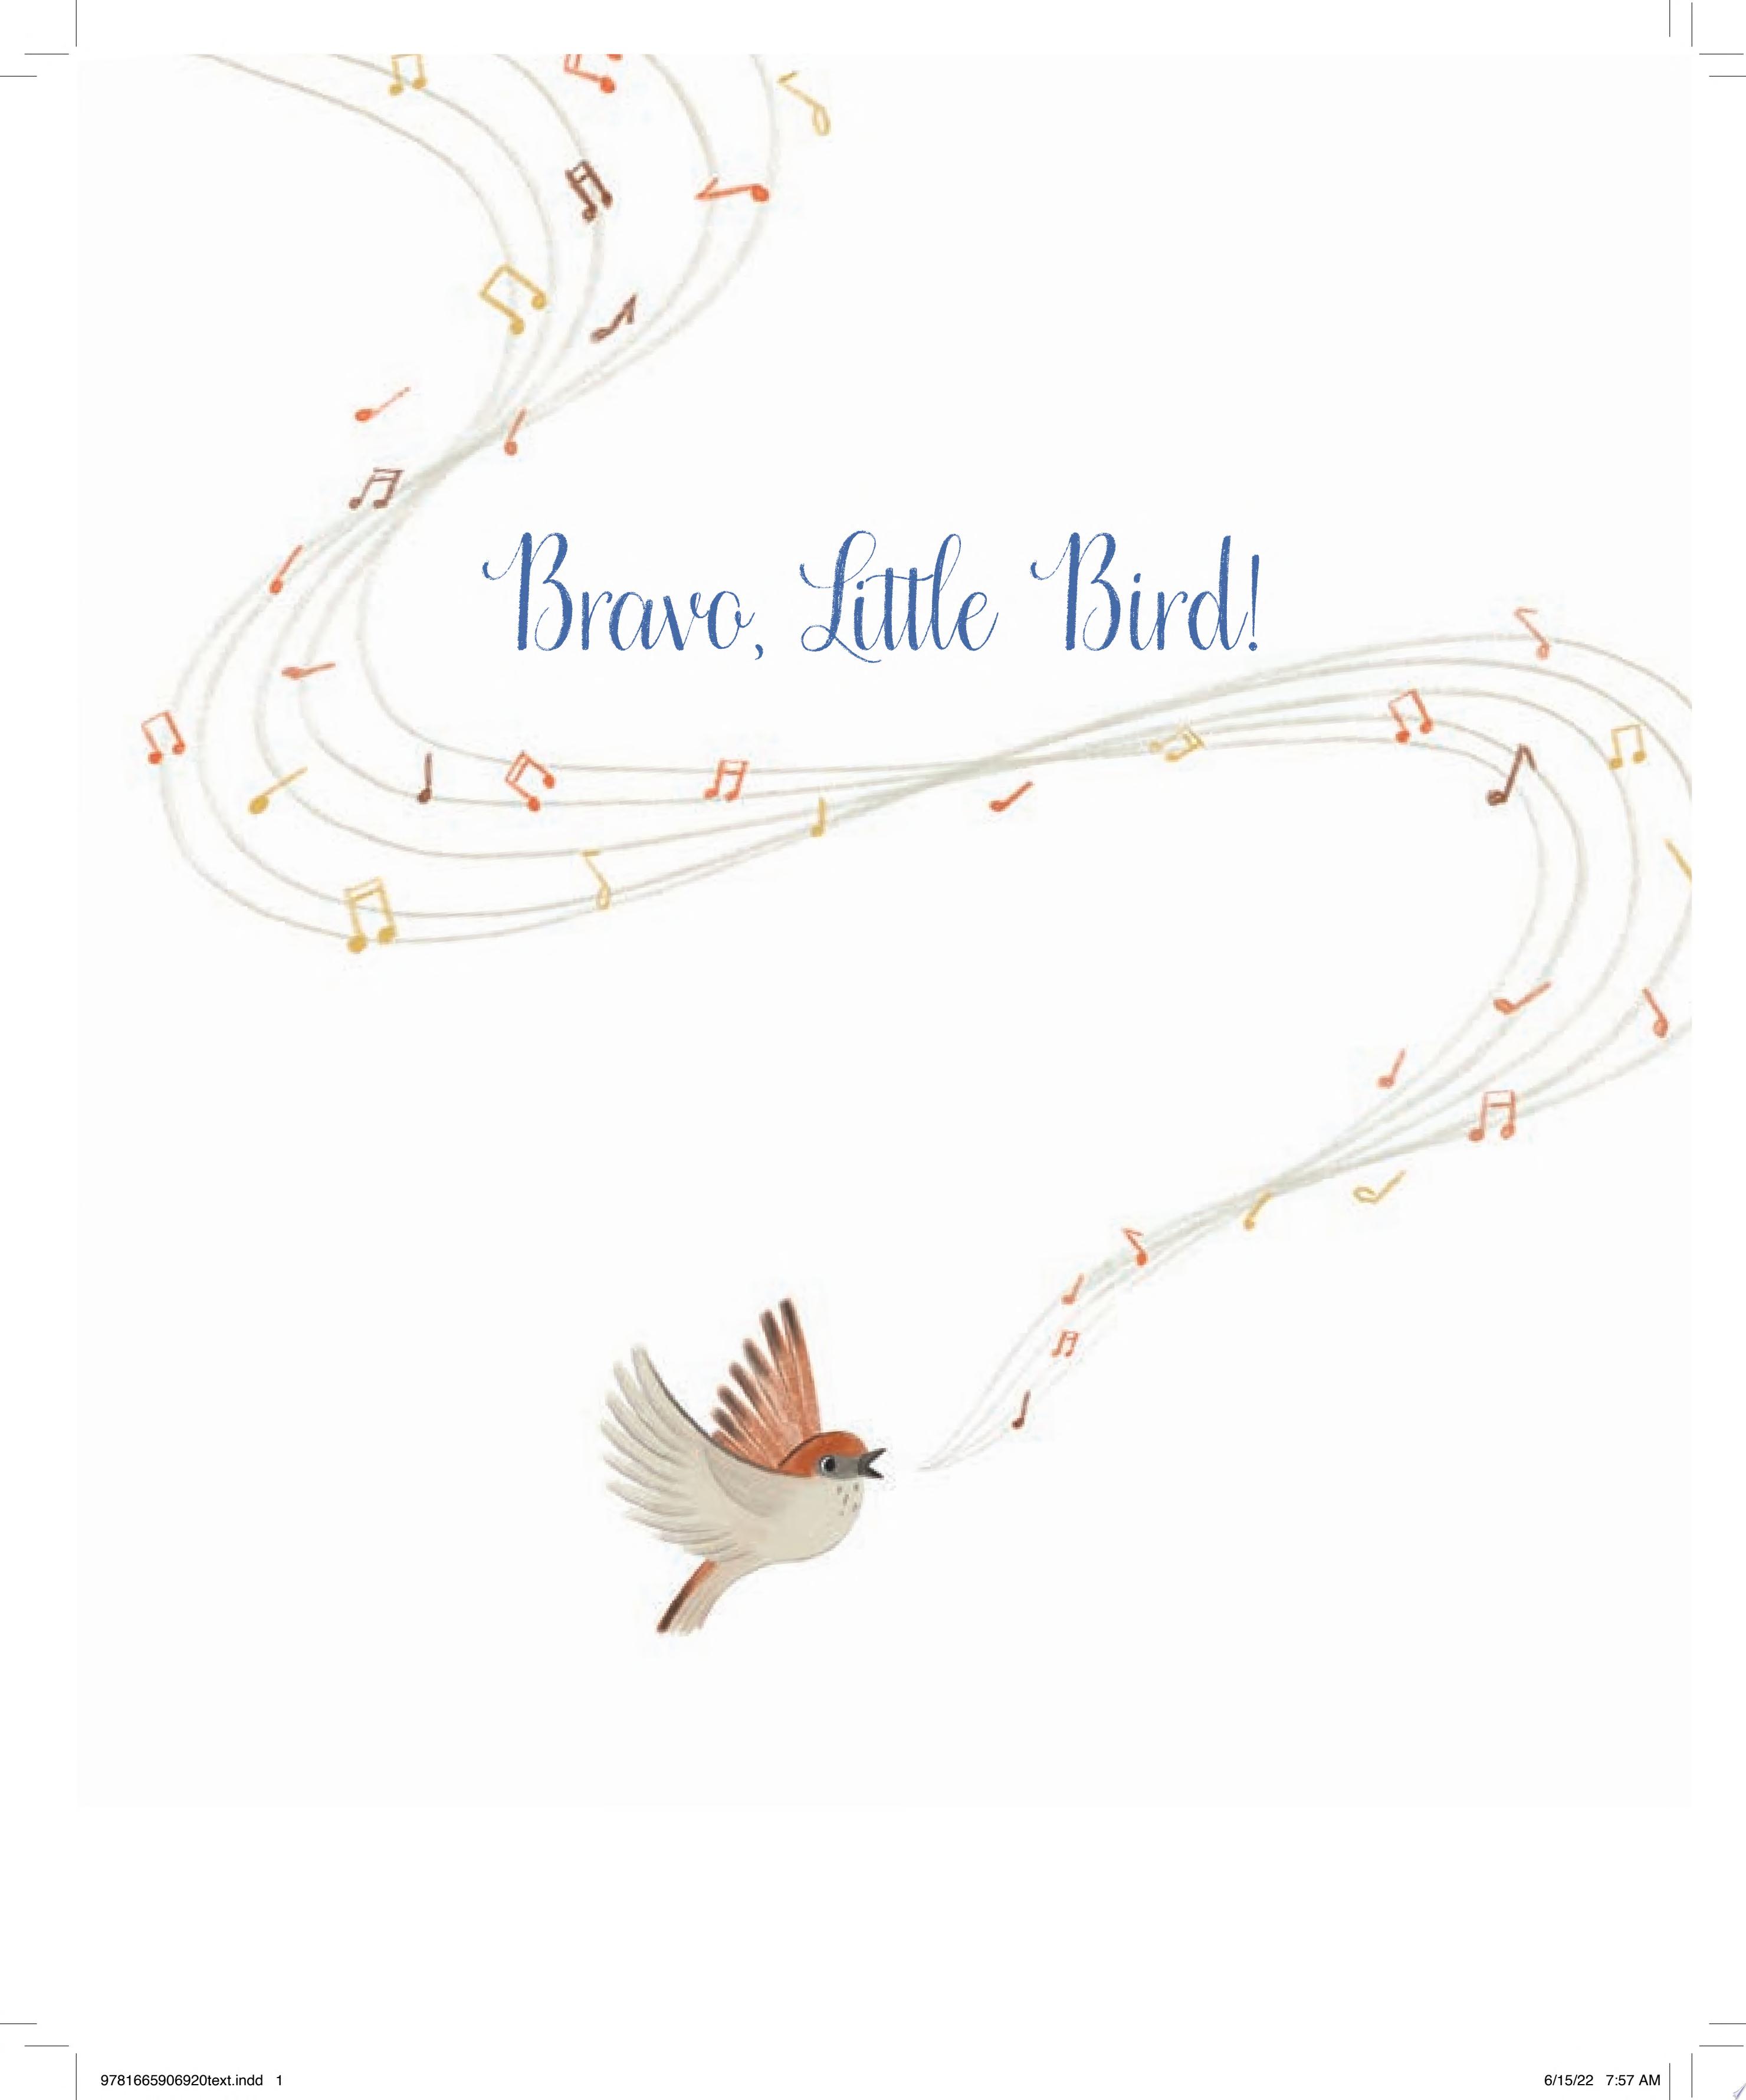 Image for "Bravo, Little Bird!"